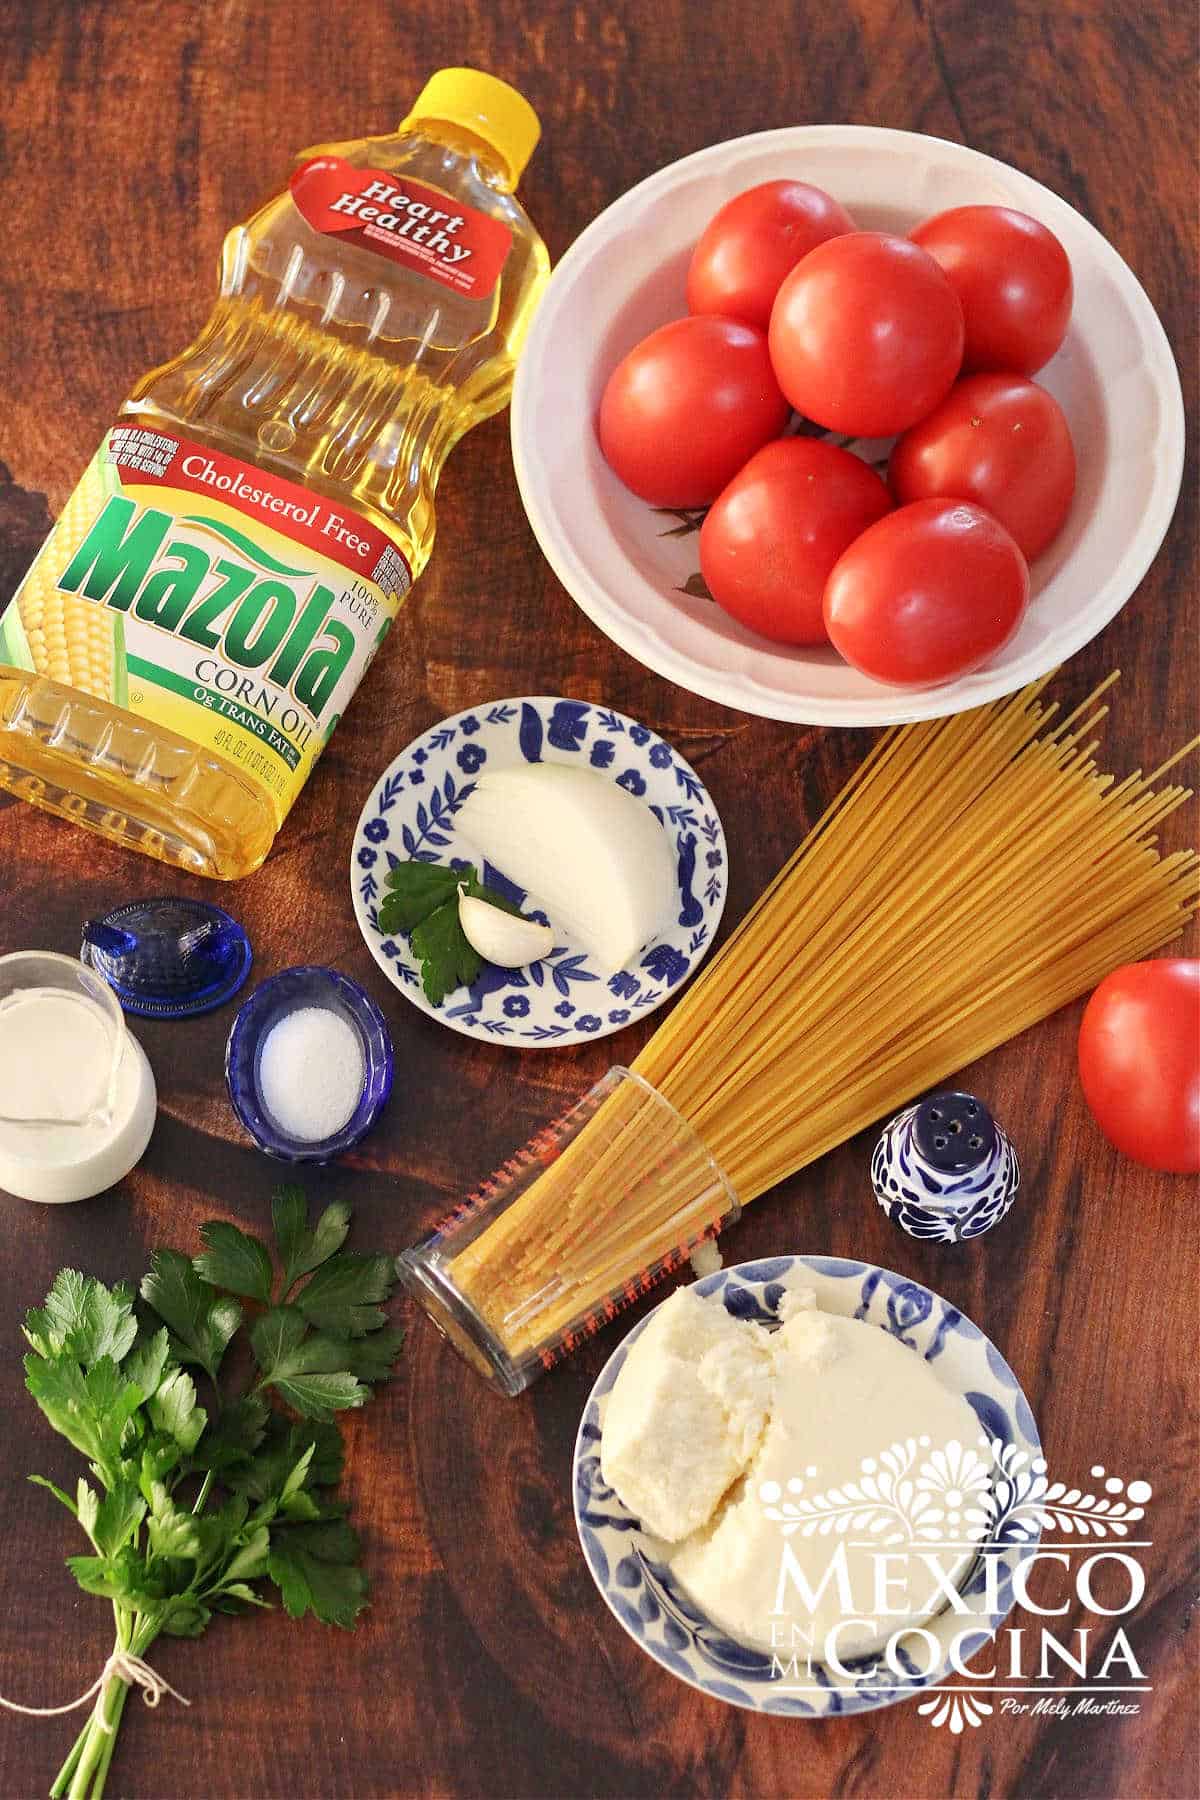 Ingredientes para la receta, espagueti, tomates, ajo, cebolla, sal.